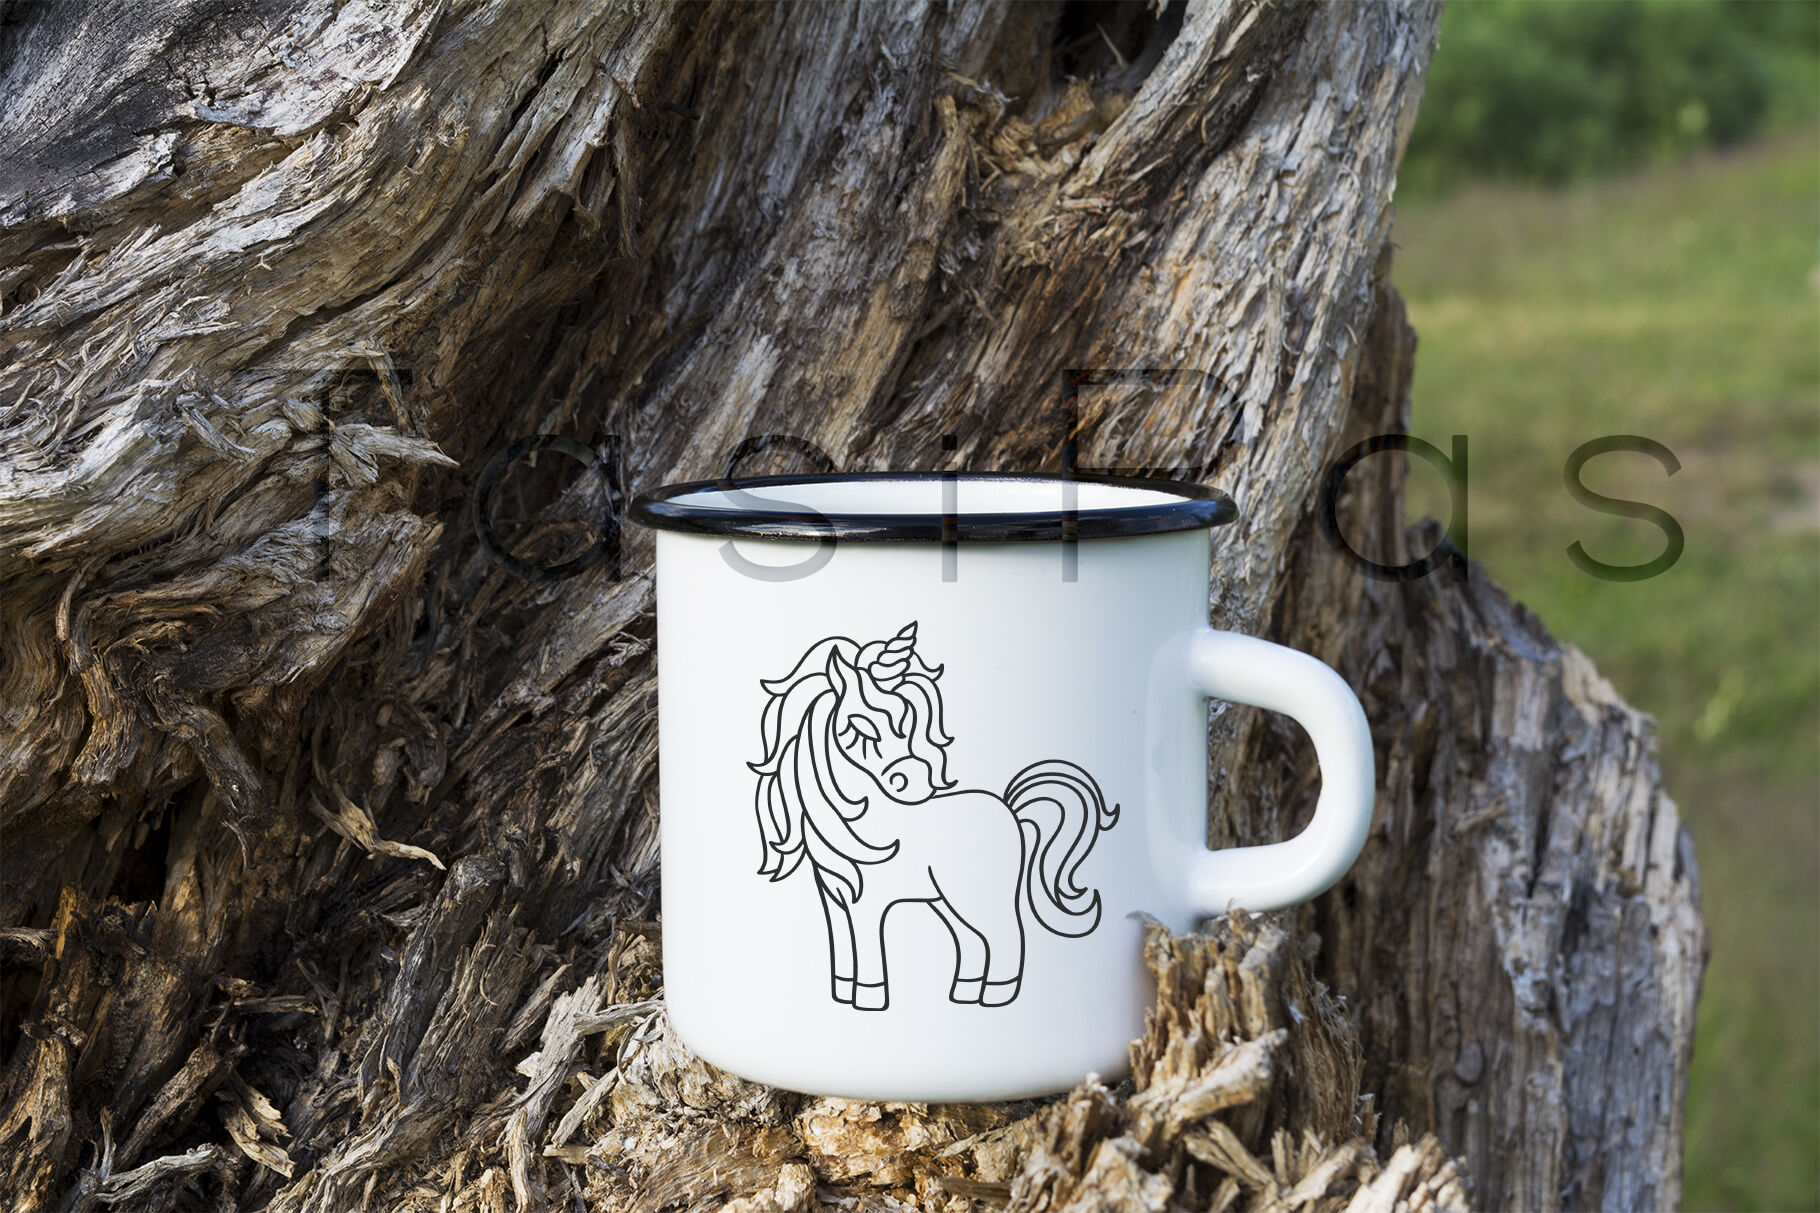 Download Campfire enamel mug mockup with stump. By TasiPas | TheHungryJPEG.com